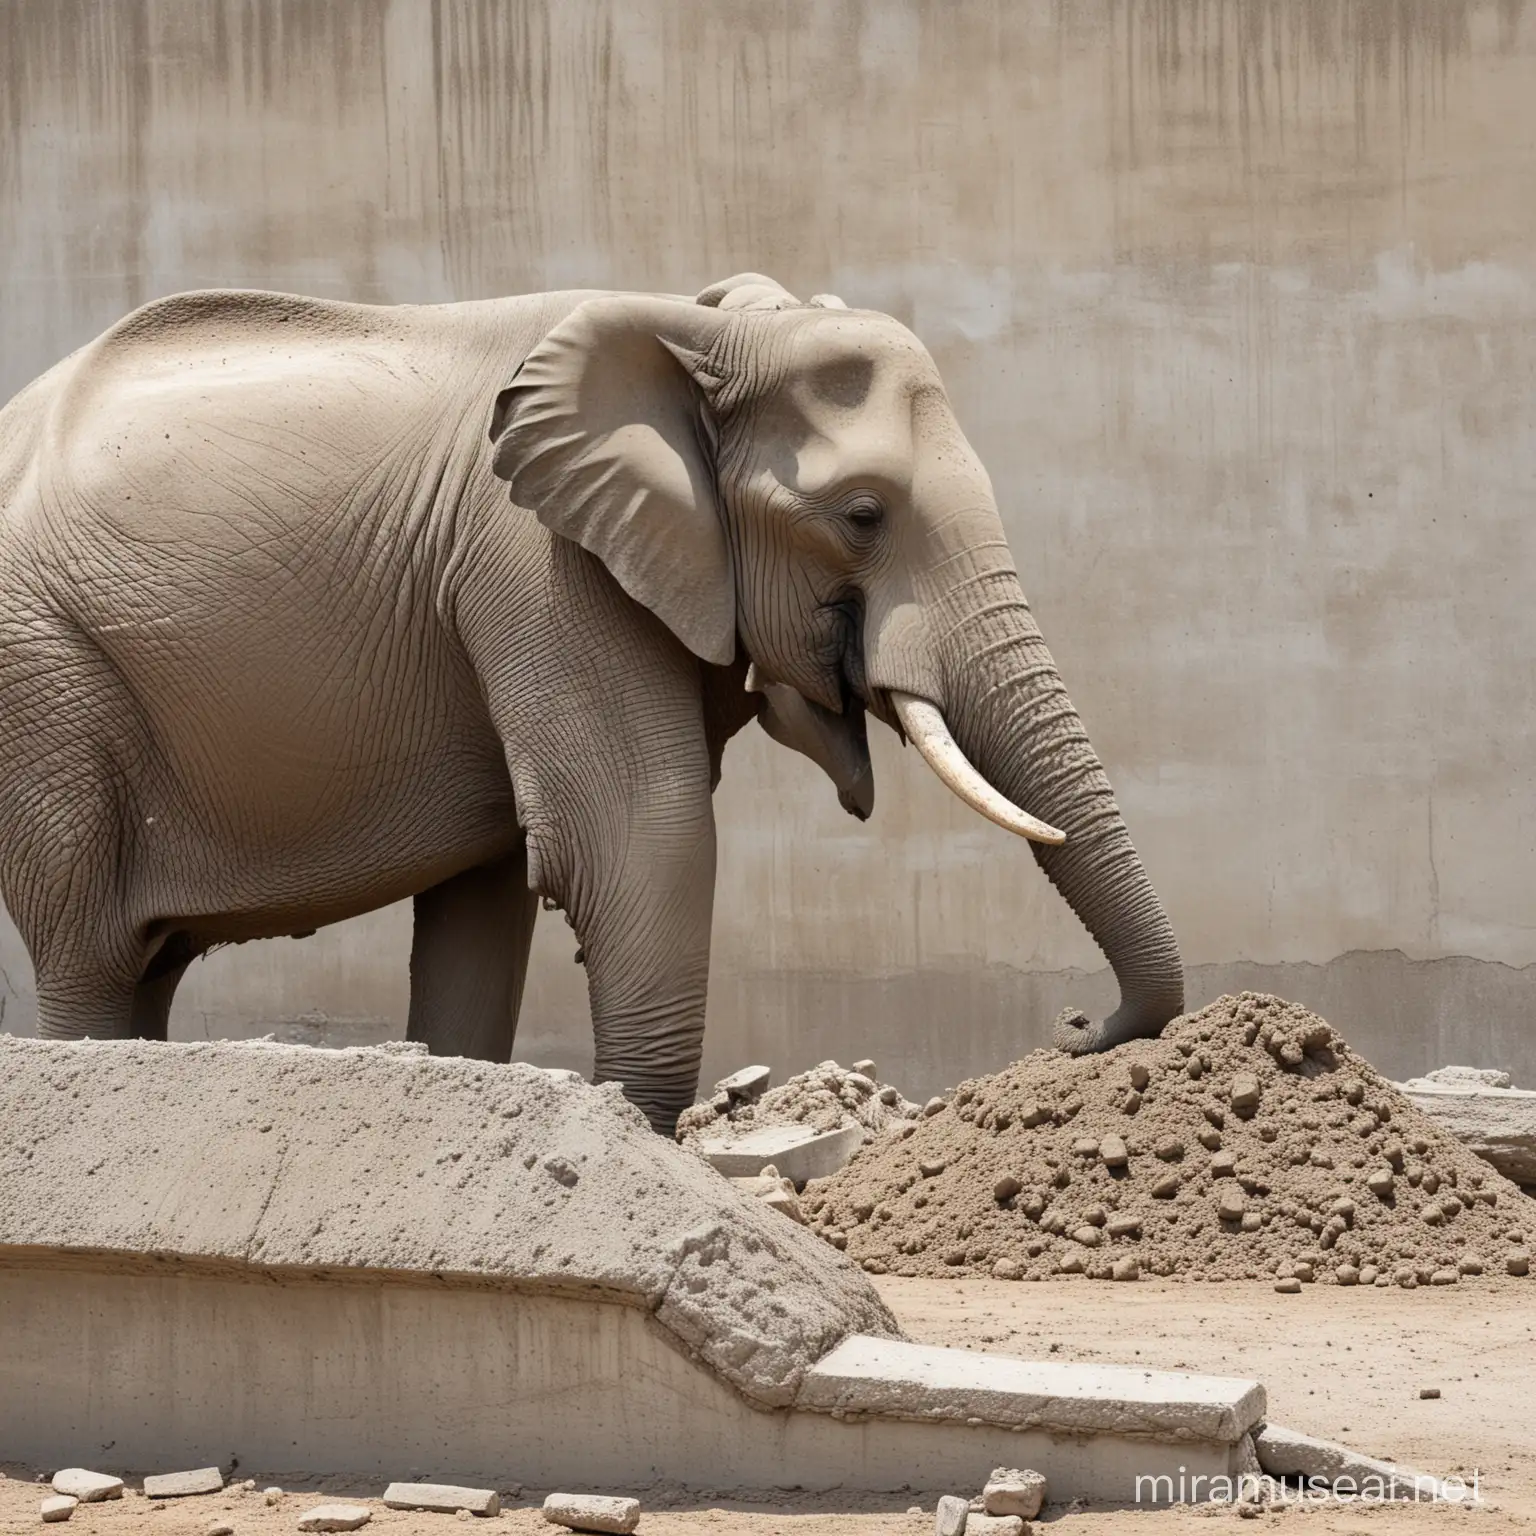 Elephant Profile in Civil Construction Site